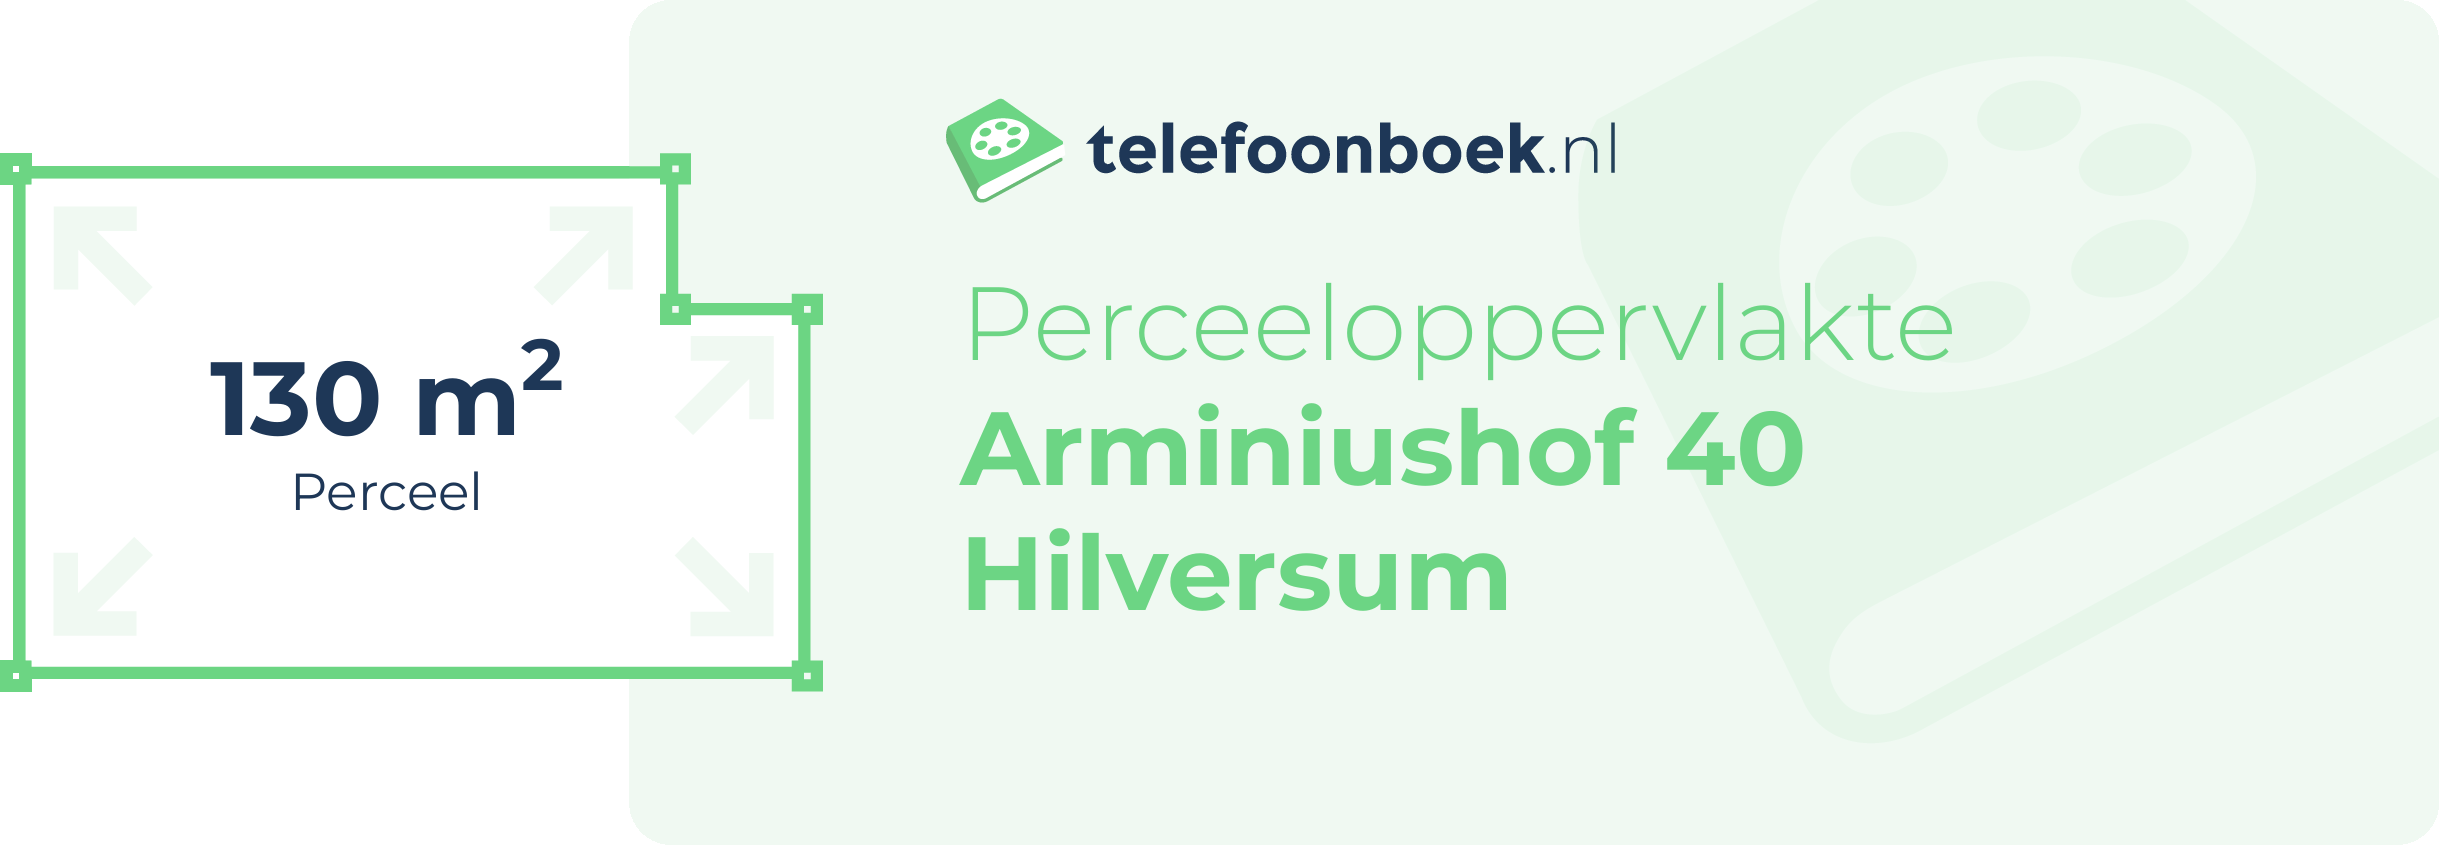 Perceeloppervlakte Arminiushof 40 Hilversum